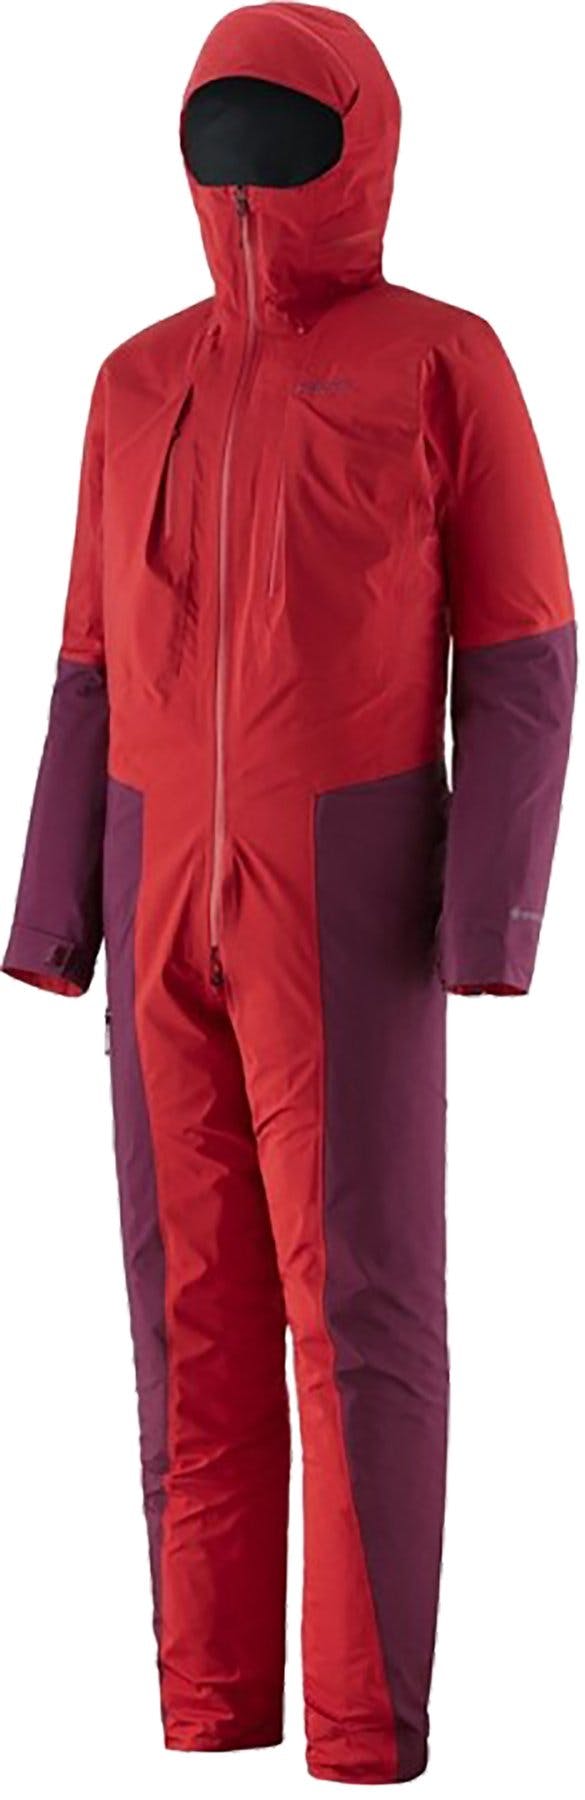 Product image for Alpine Suit - Unisex